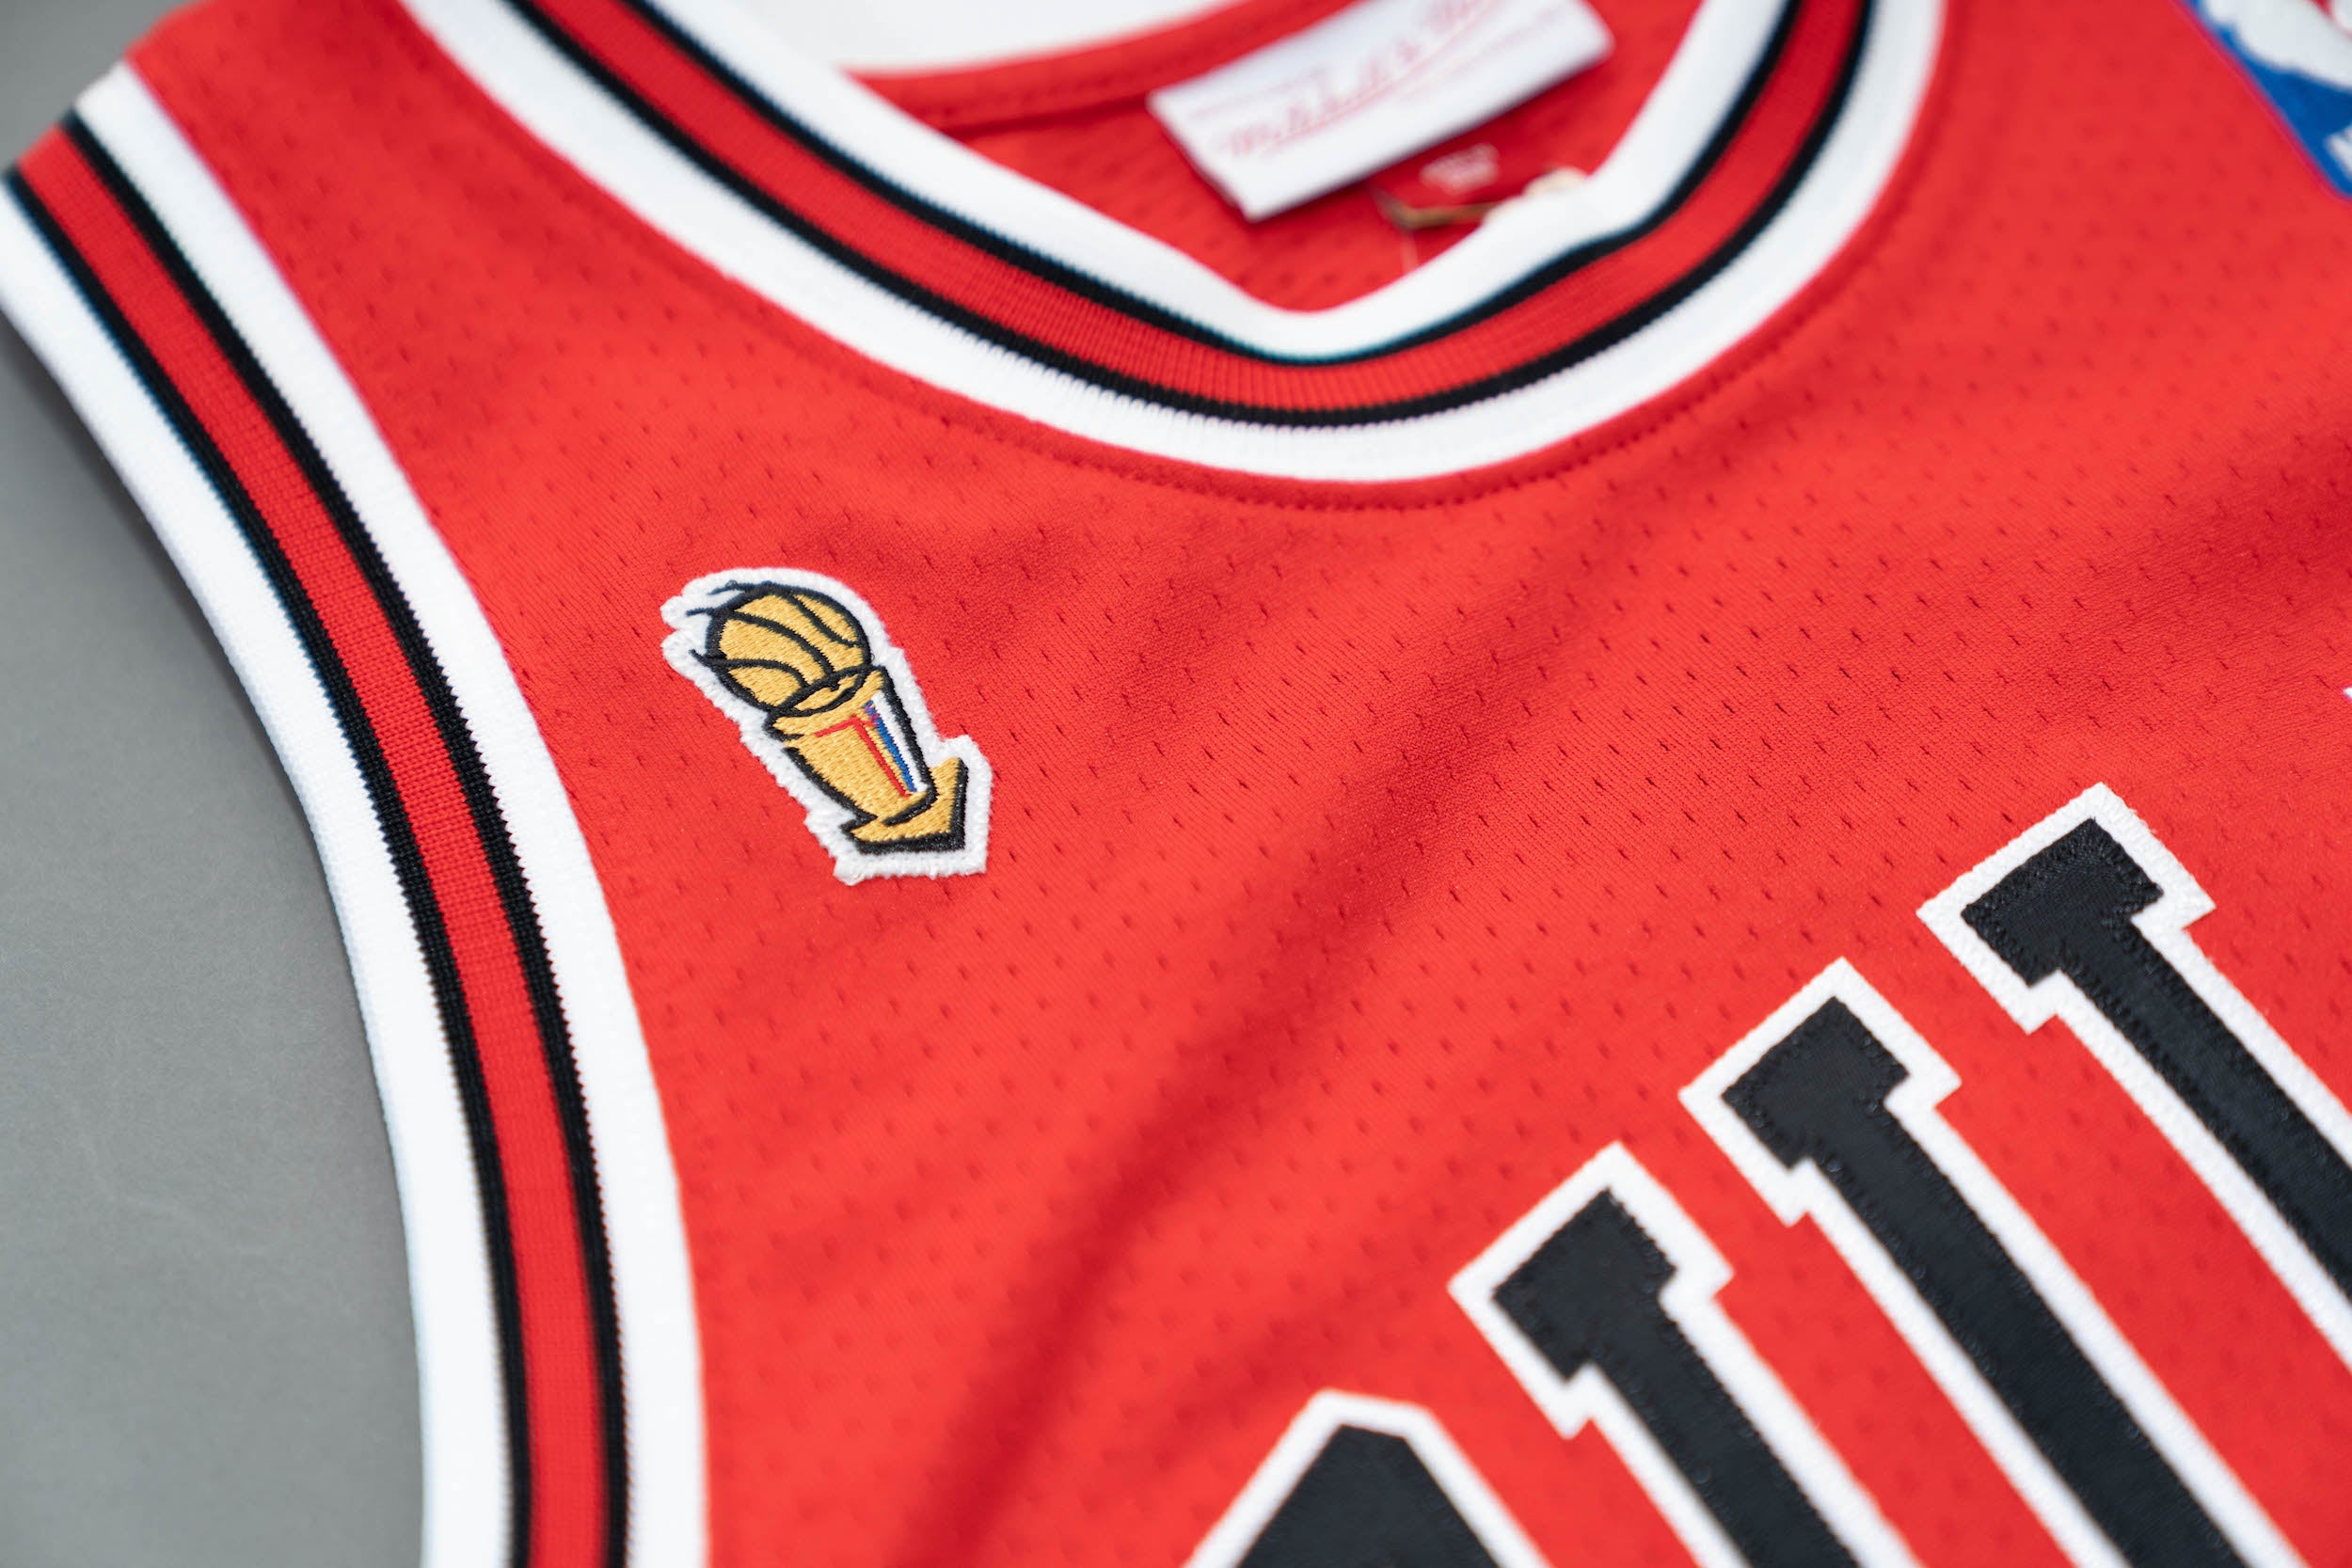 Mitchell & Ness Authentic '95 Chicago Bulls Michael Jordan Home Finals Jersey